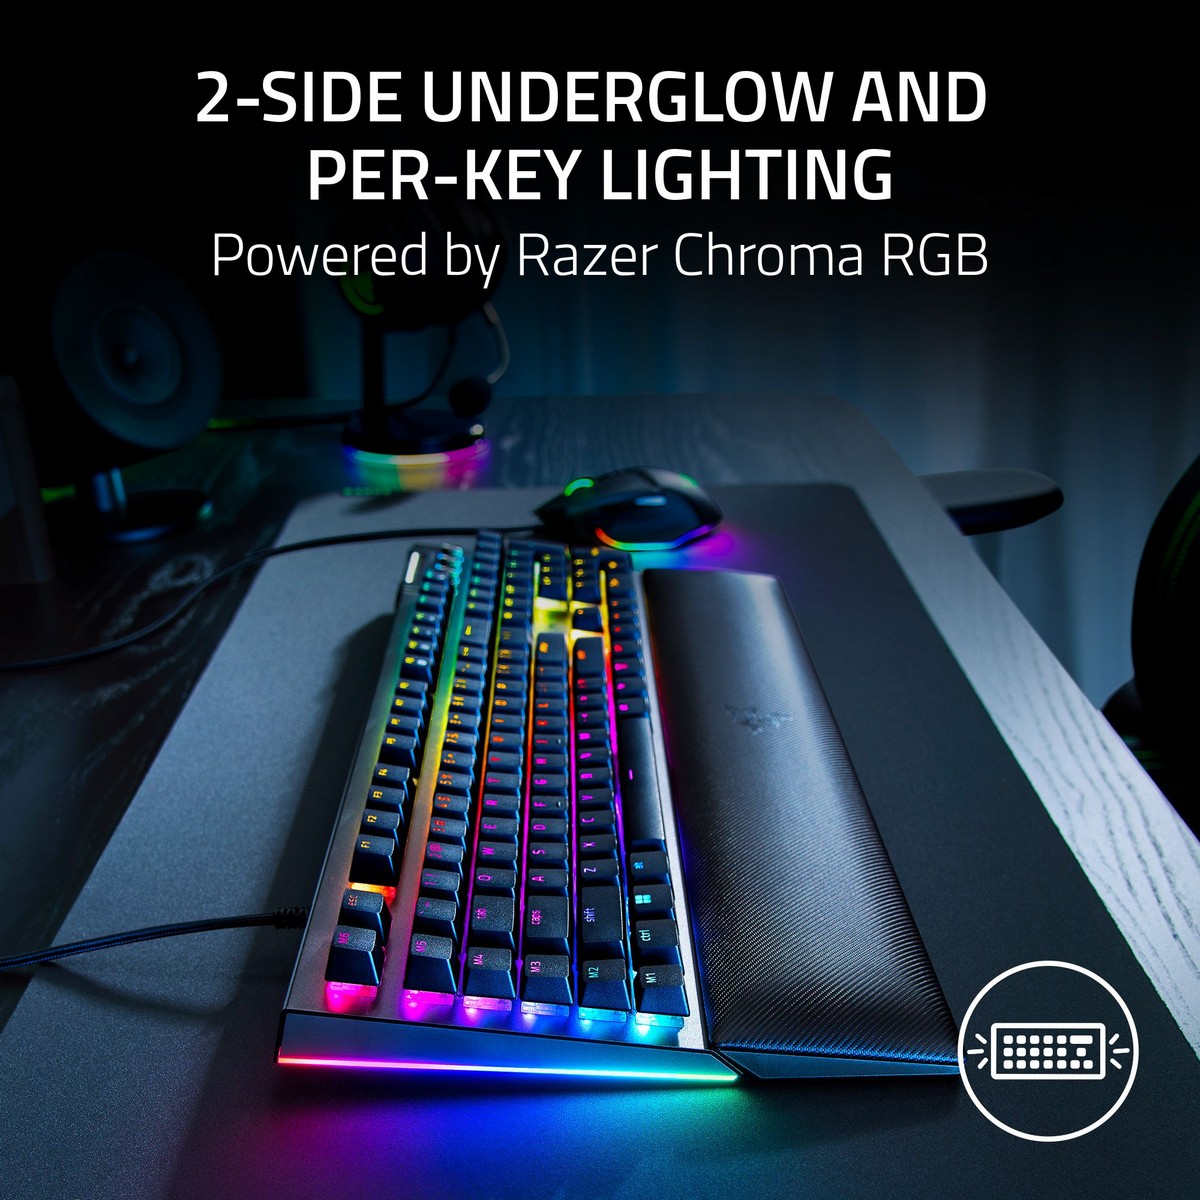 Razer BlackWidow V4 USB RGB Mechanical Gaming Keyboard Green Clicky Switch - UK